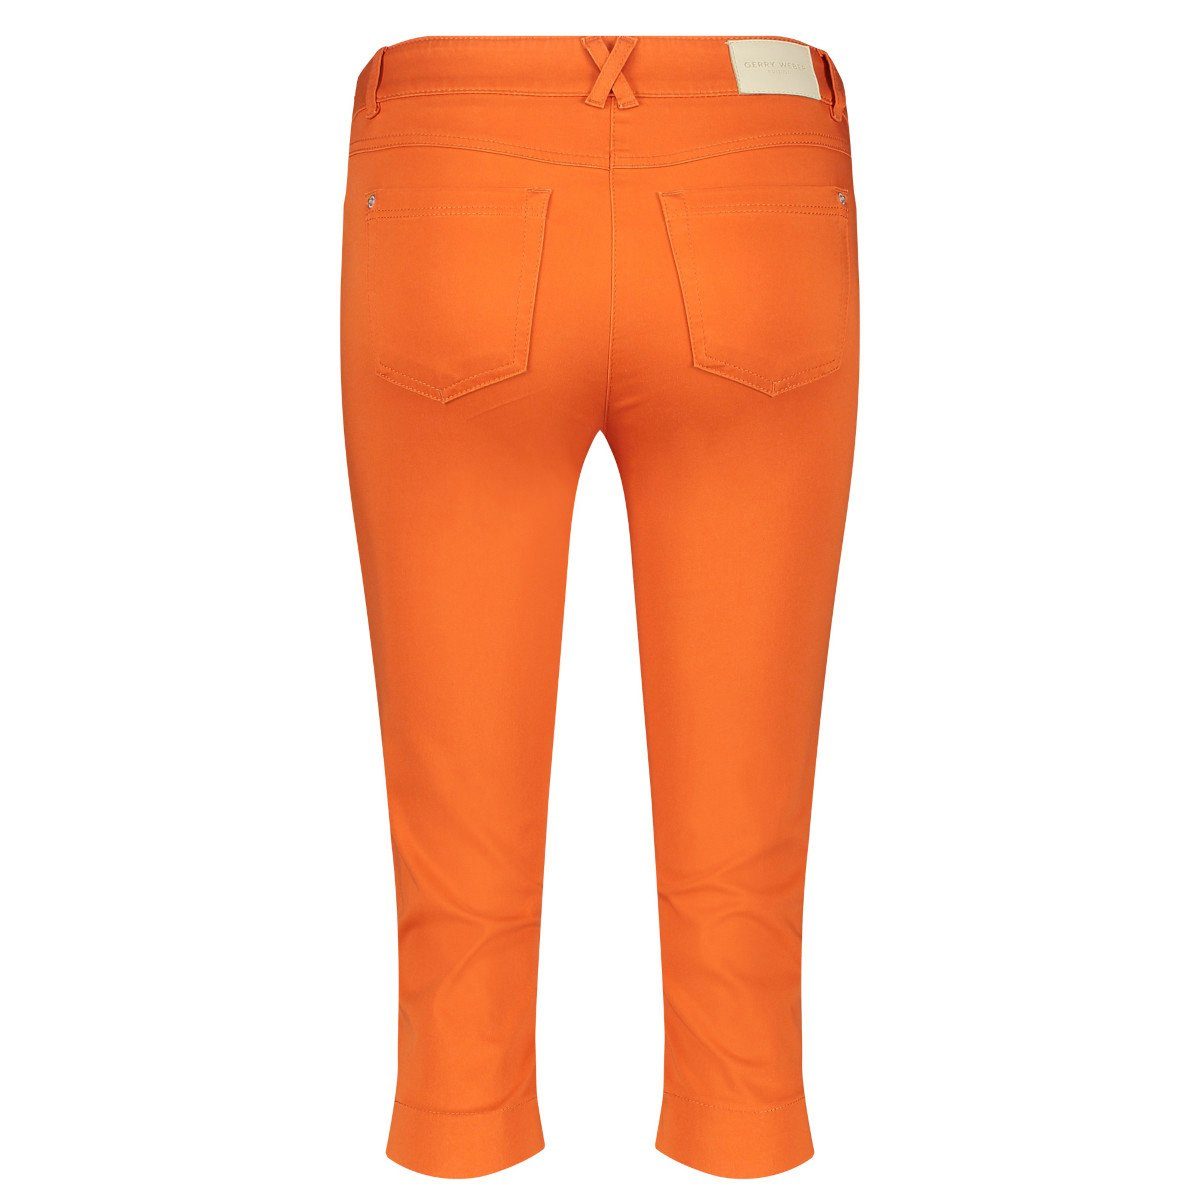 GERRY WEBER Caprijeans Best4ME Orange 92343-67712 Capri Fit Burnt Perfect